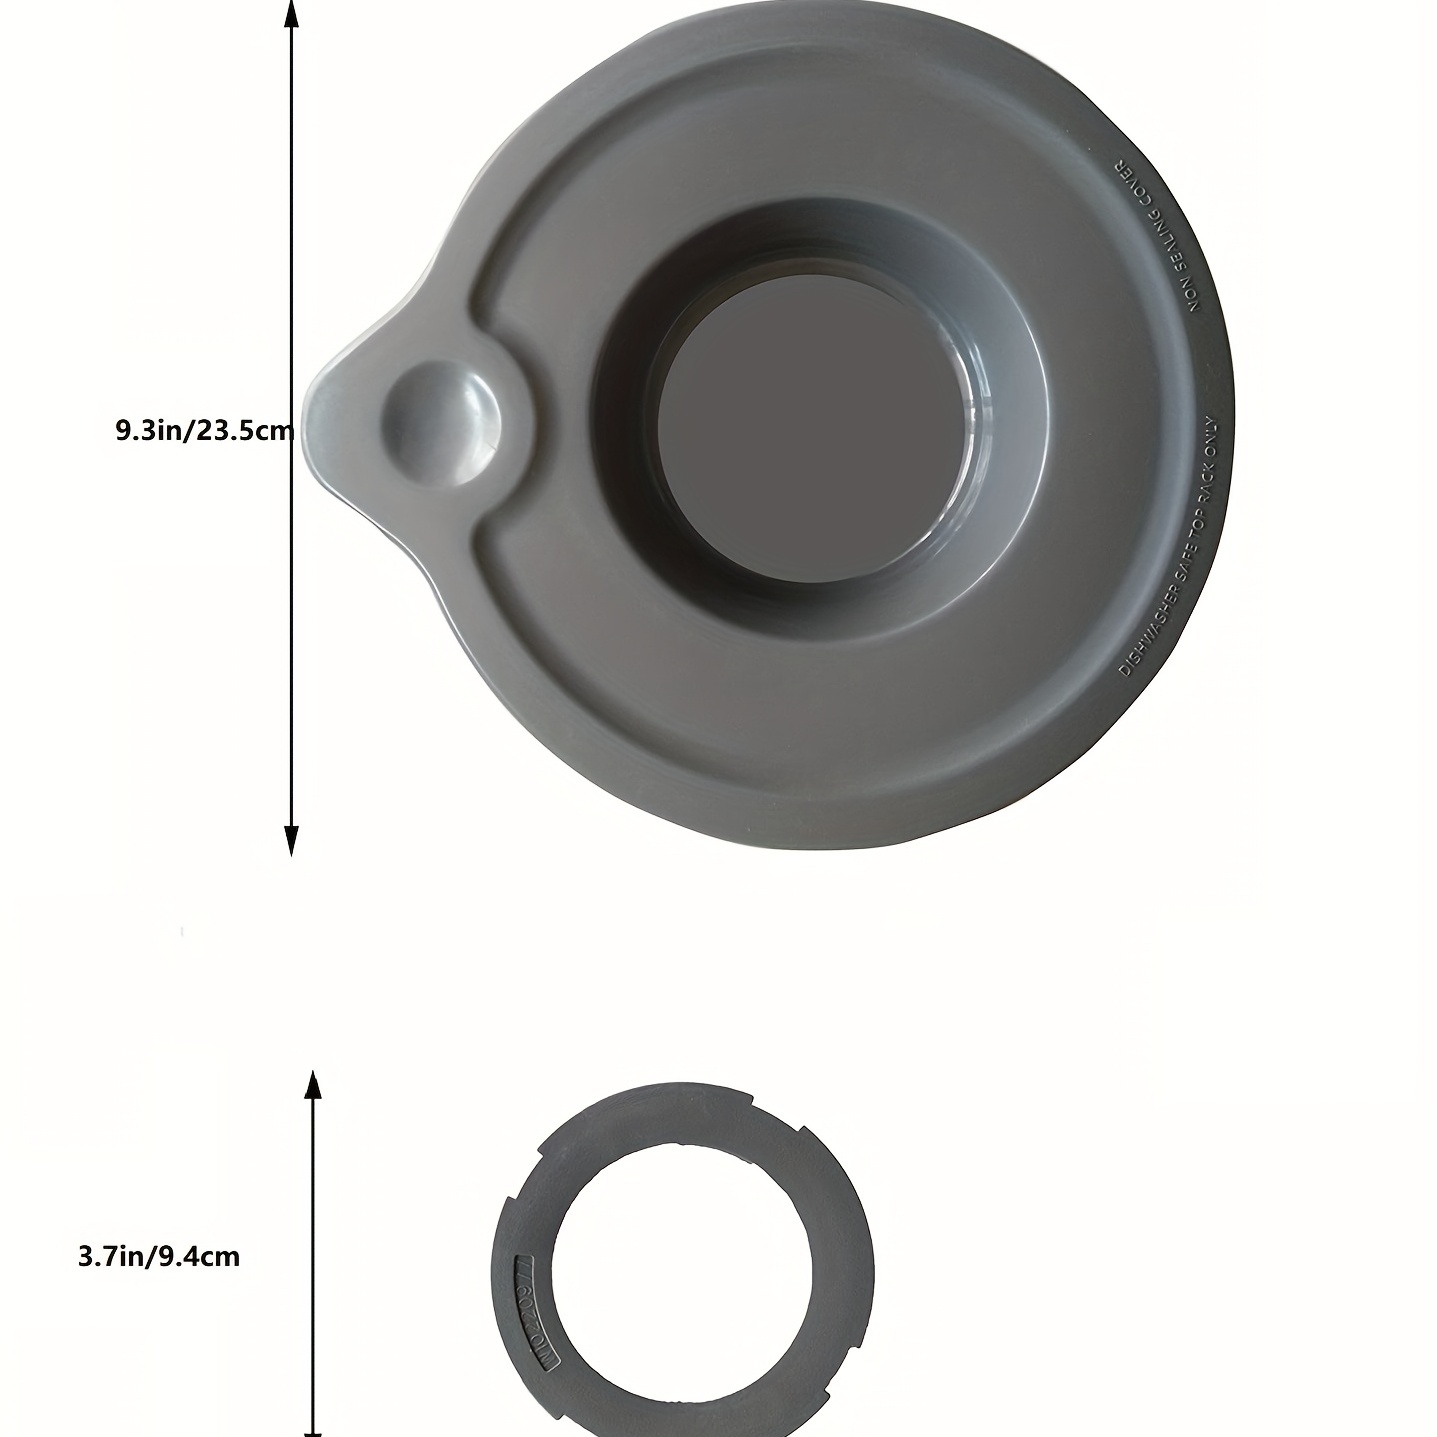 Mixer Bowl Lid Covers for KitchenAid 5.5-6 Quart Bowls - Stand